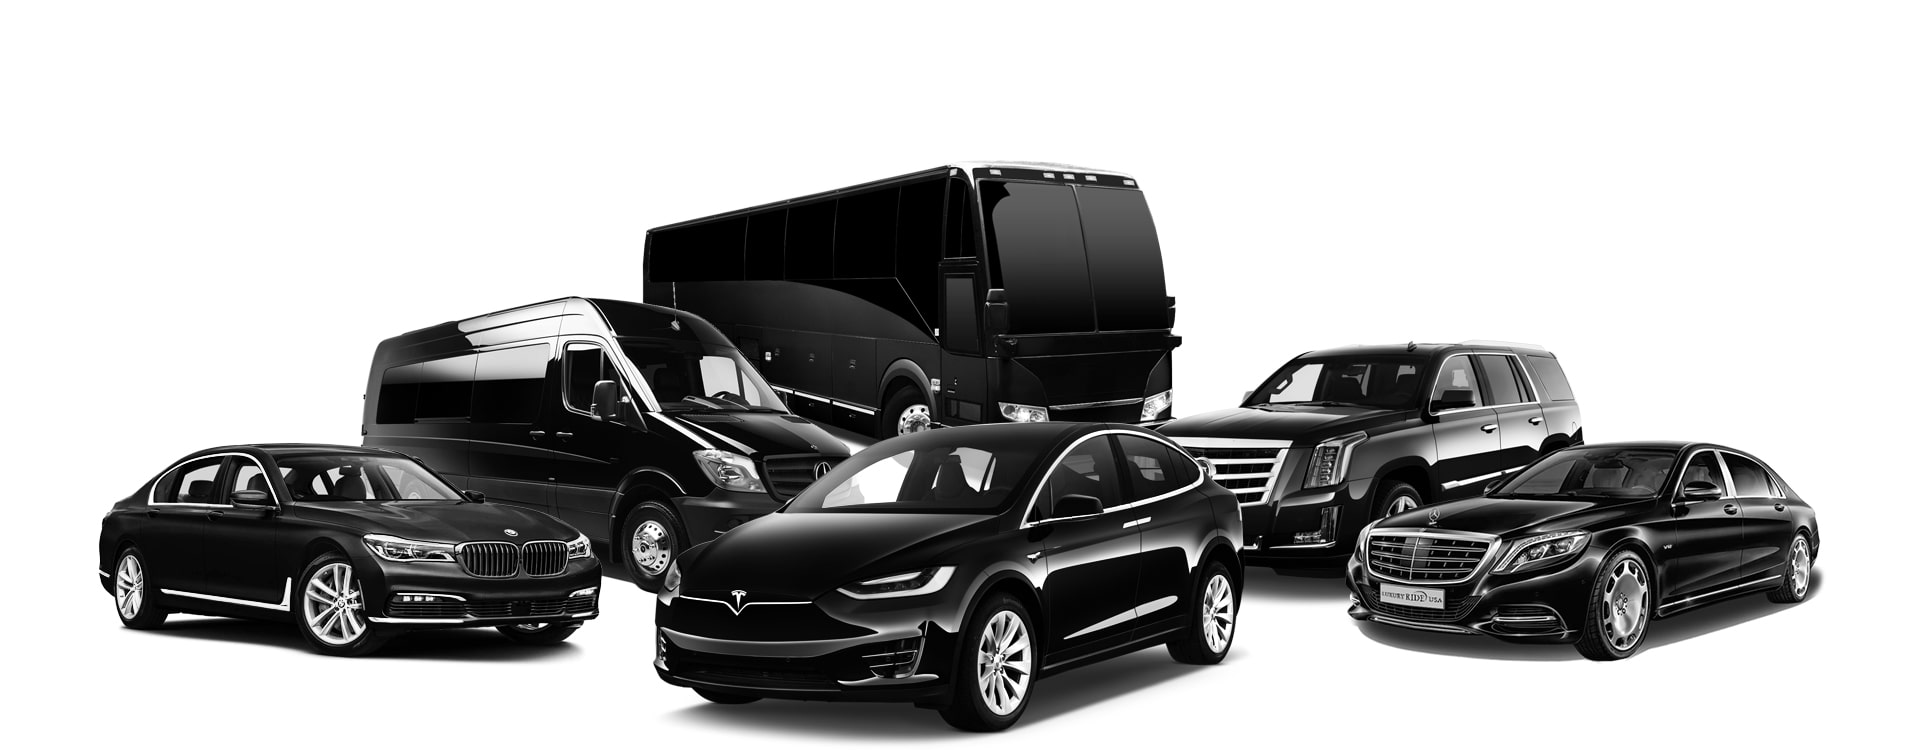 Luxury-Ride-NYC-Chauffeured-service-Tesla-Model-X